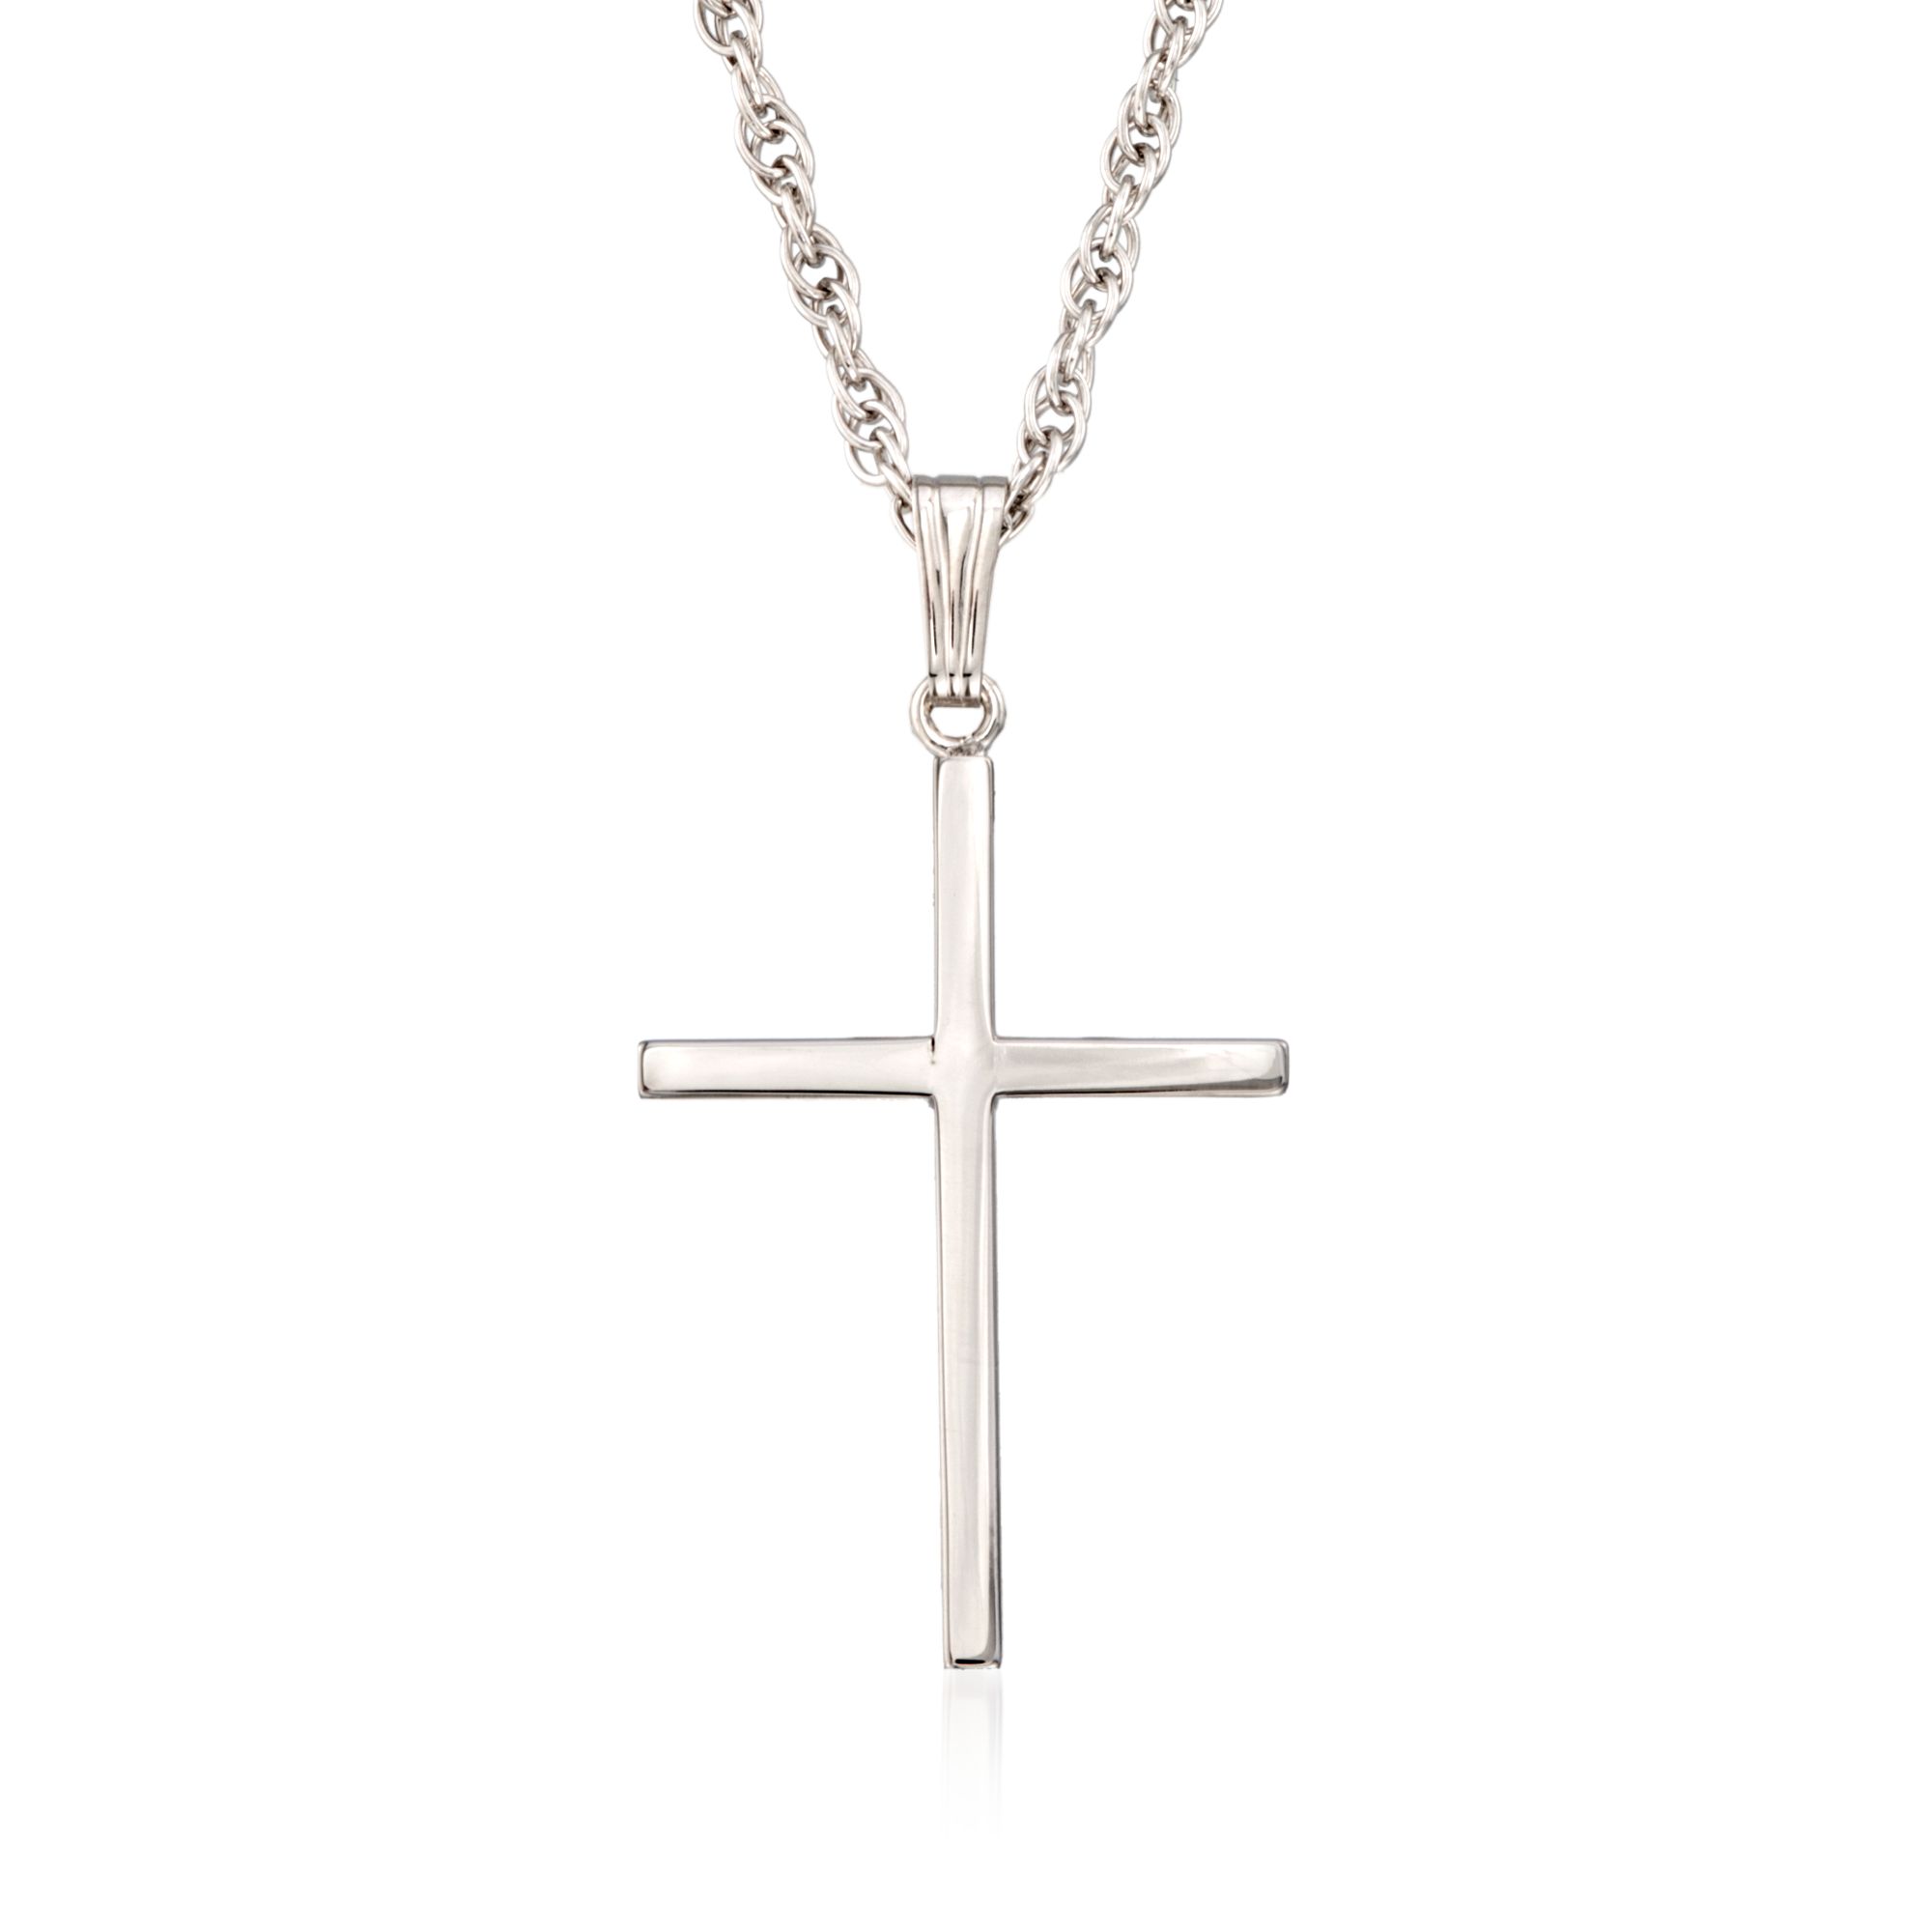 Men's Sterling Silver Classic Cross Pendant Necklace. 22" | Ross-Simons